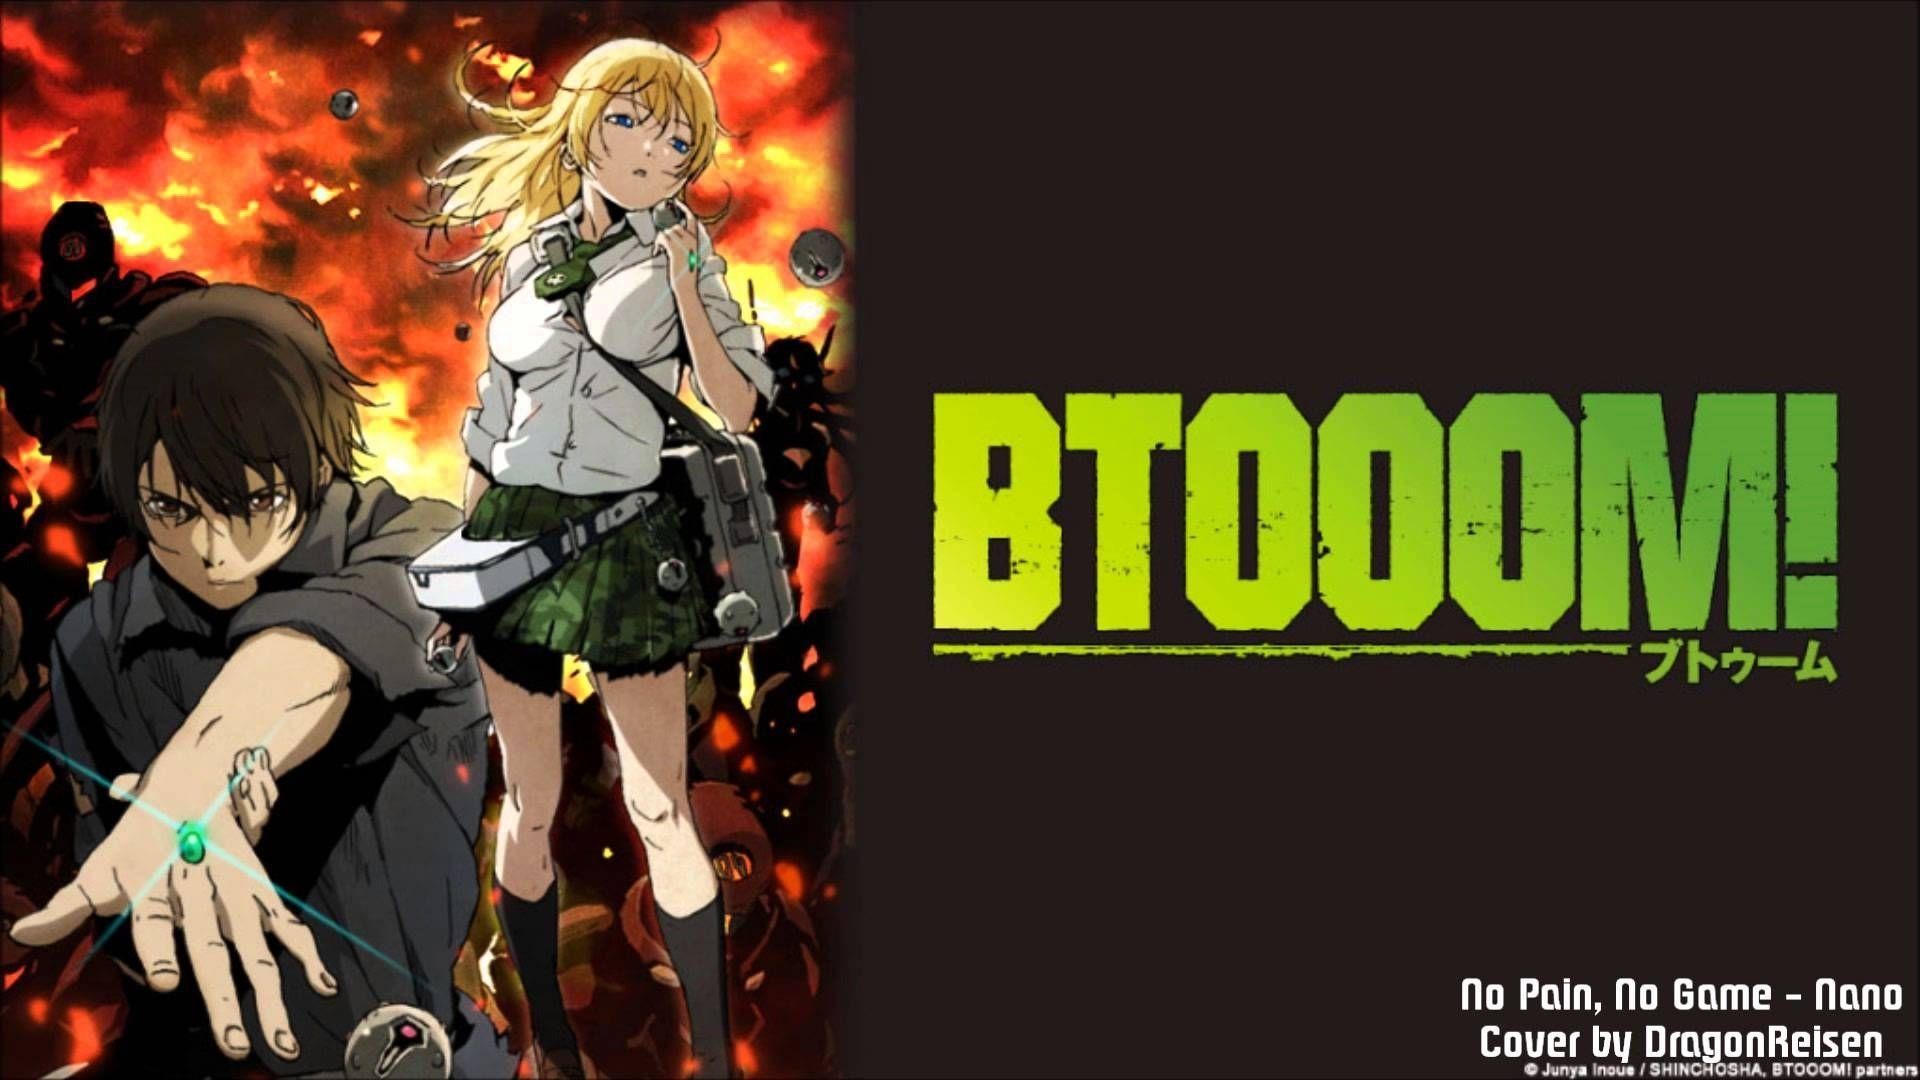 Btooom - Btooom Anime Wallpaper Hd - HD Wallpaper 